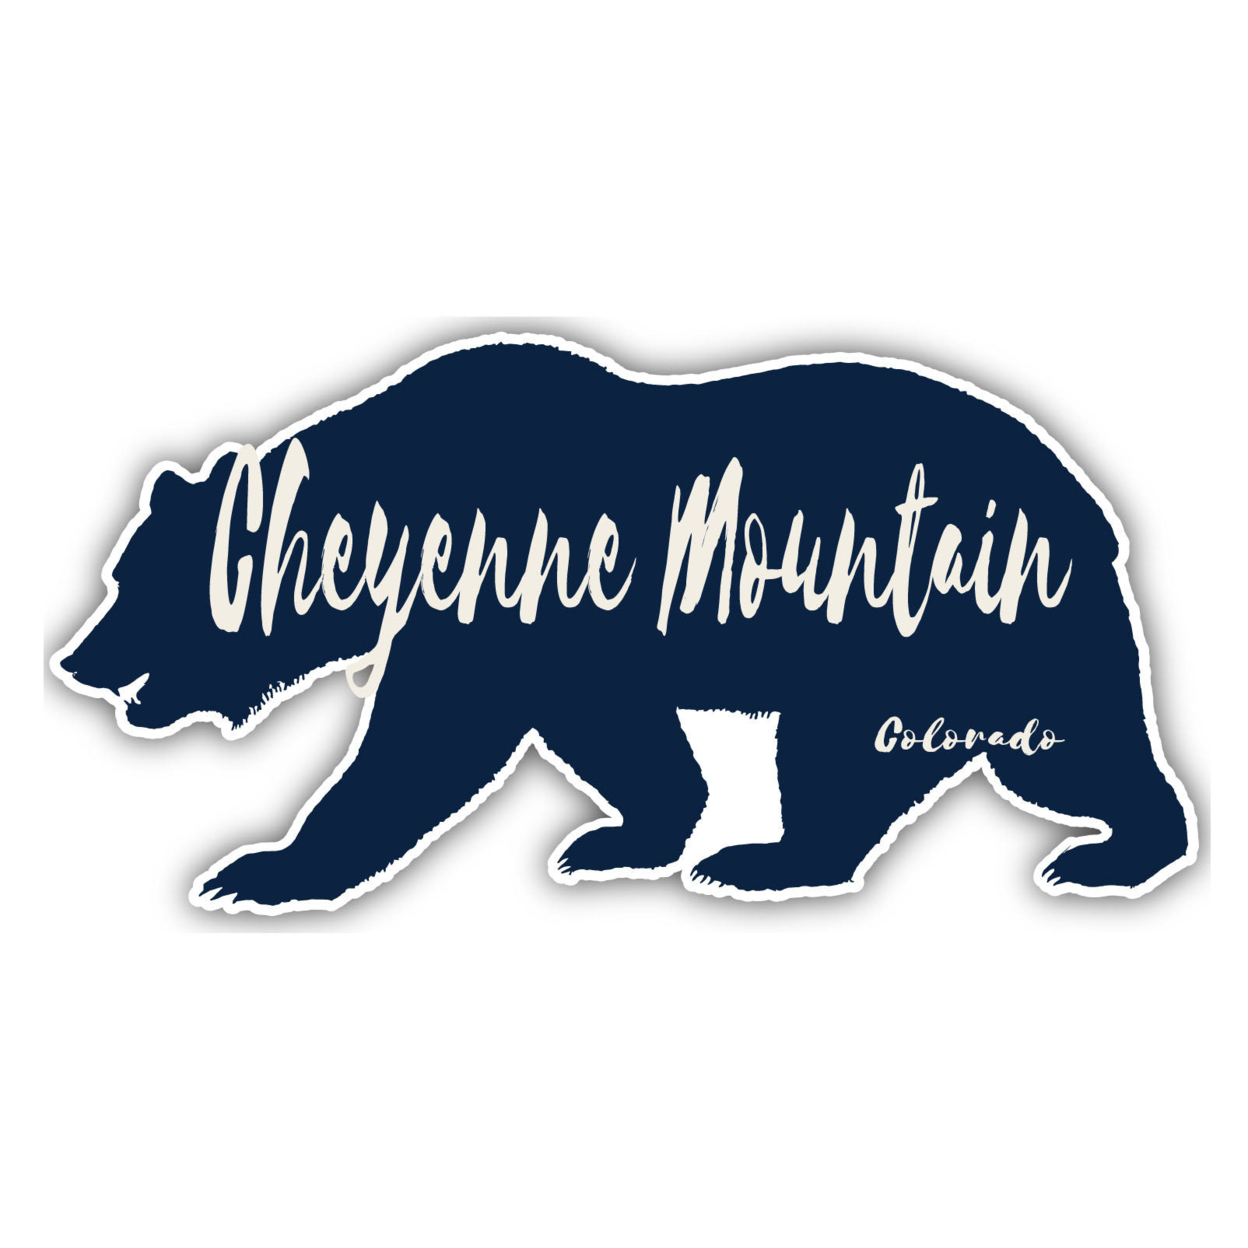 Cheyenne Mountain Colorado Souvenir Decorative Stickers (Choose Theme And Size) - Single Unit, 12-Inch, Camp Life